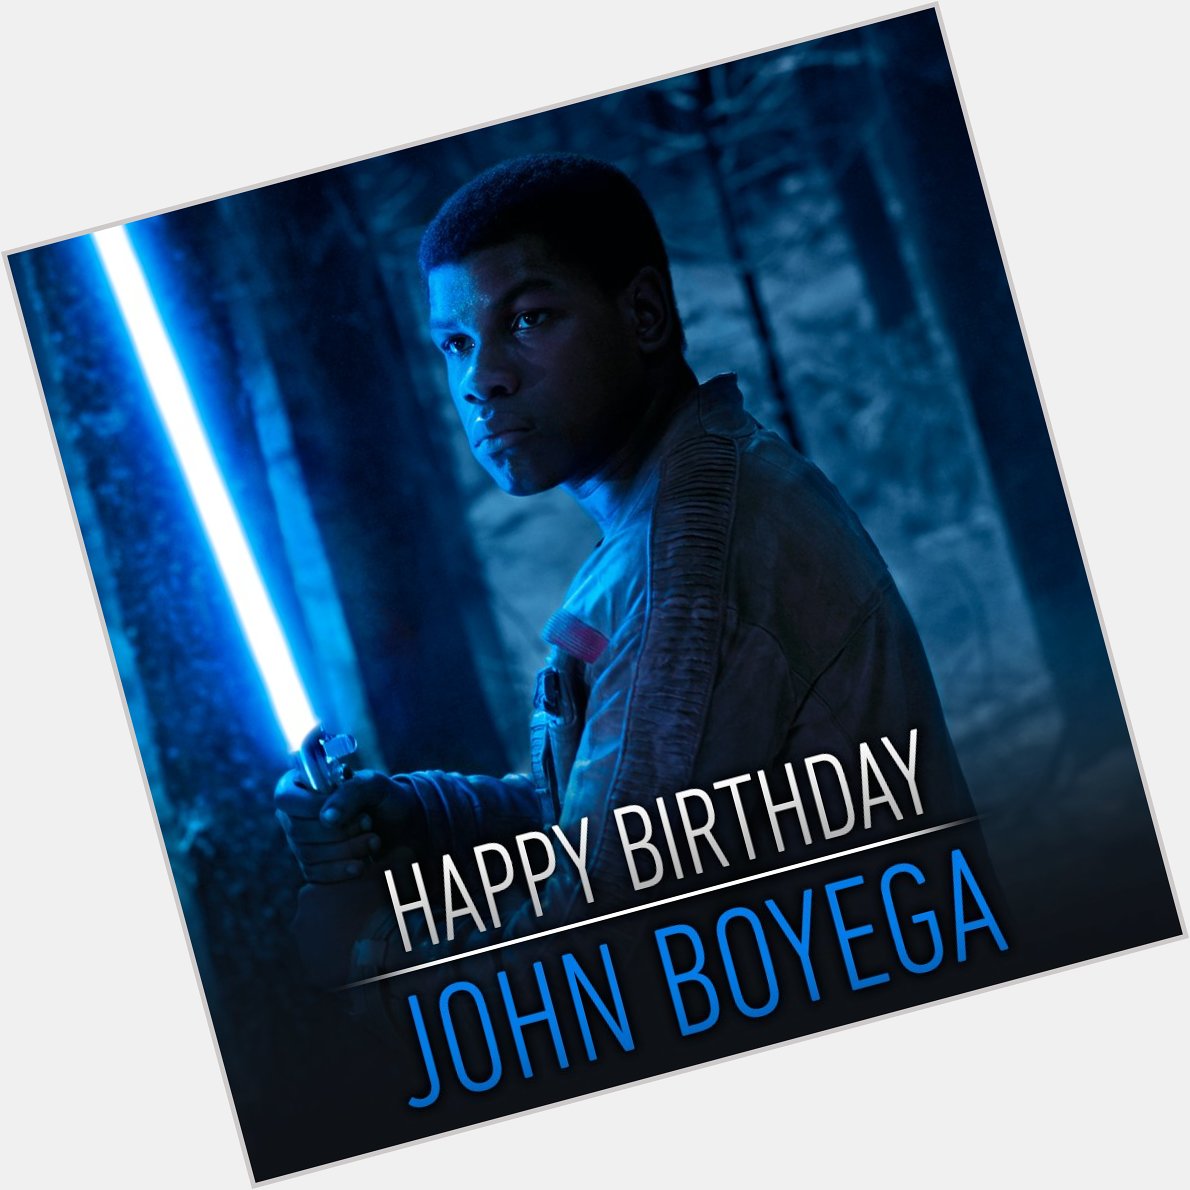 Happy Birthday an John Boyega aka Finn aka FN-2187 aka große Nummer aka Verräter! Wir wünschen alles Gute. 